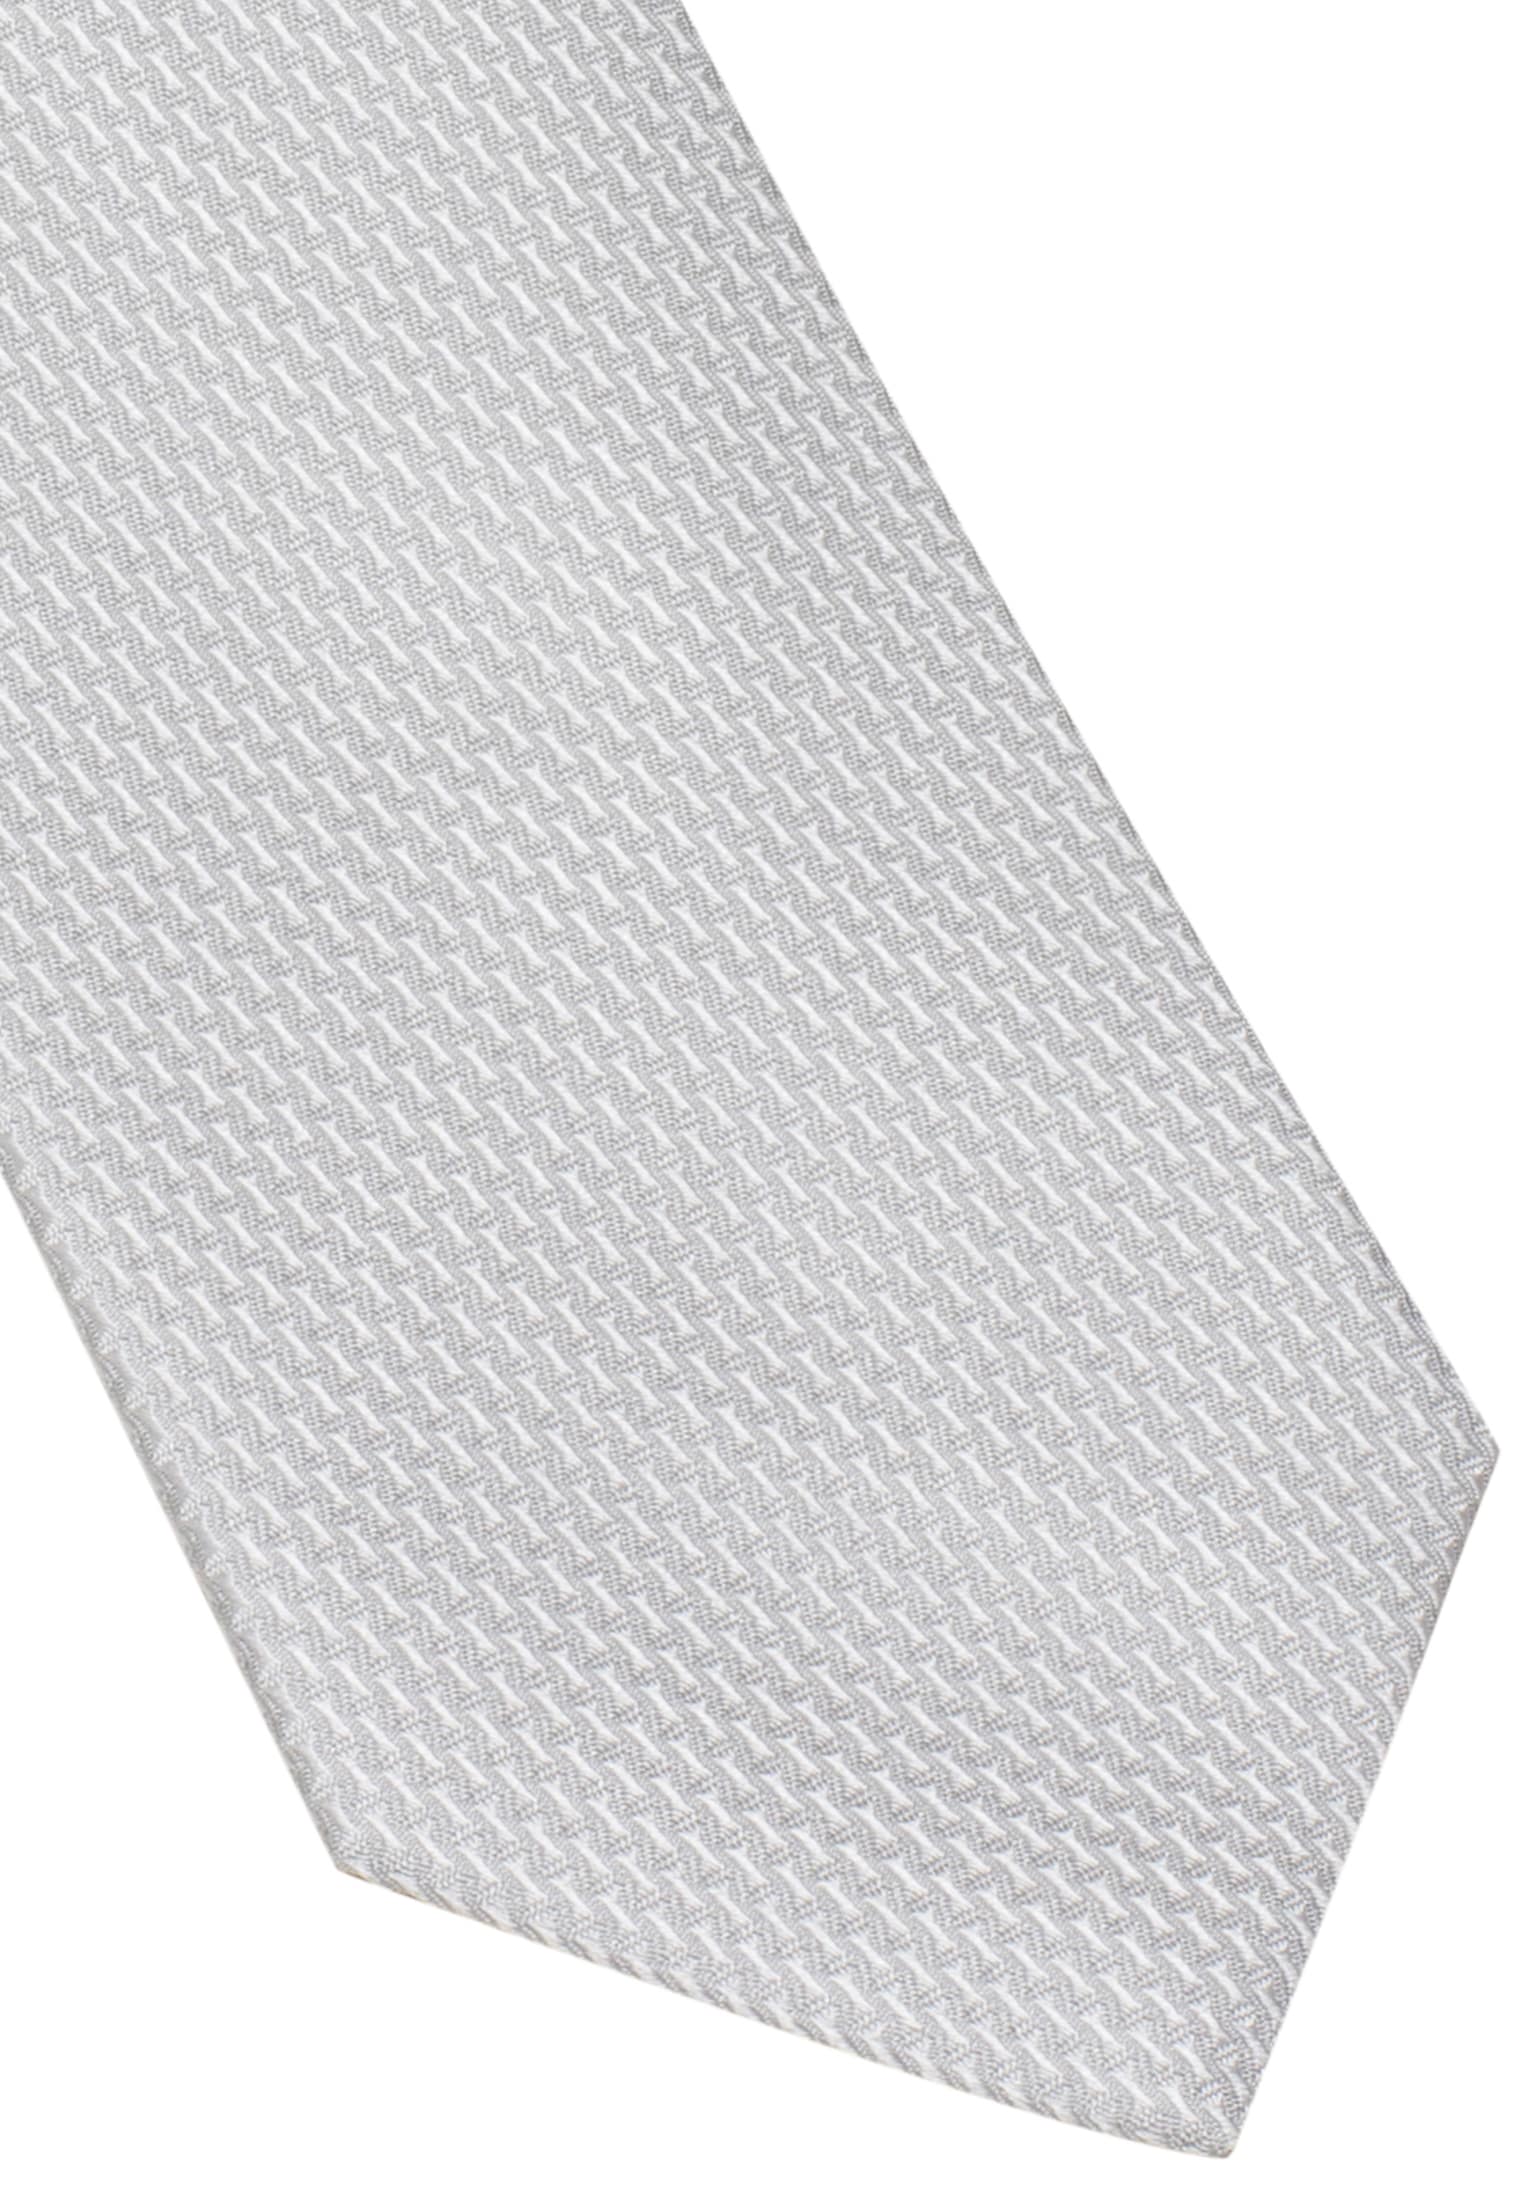 Krawatte in silber 142 | 1AC01872-03-11-142 | strukturiert | silber